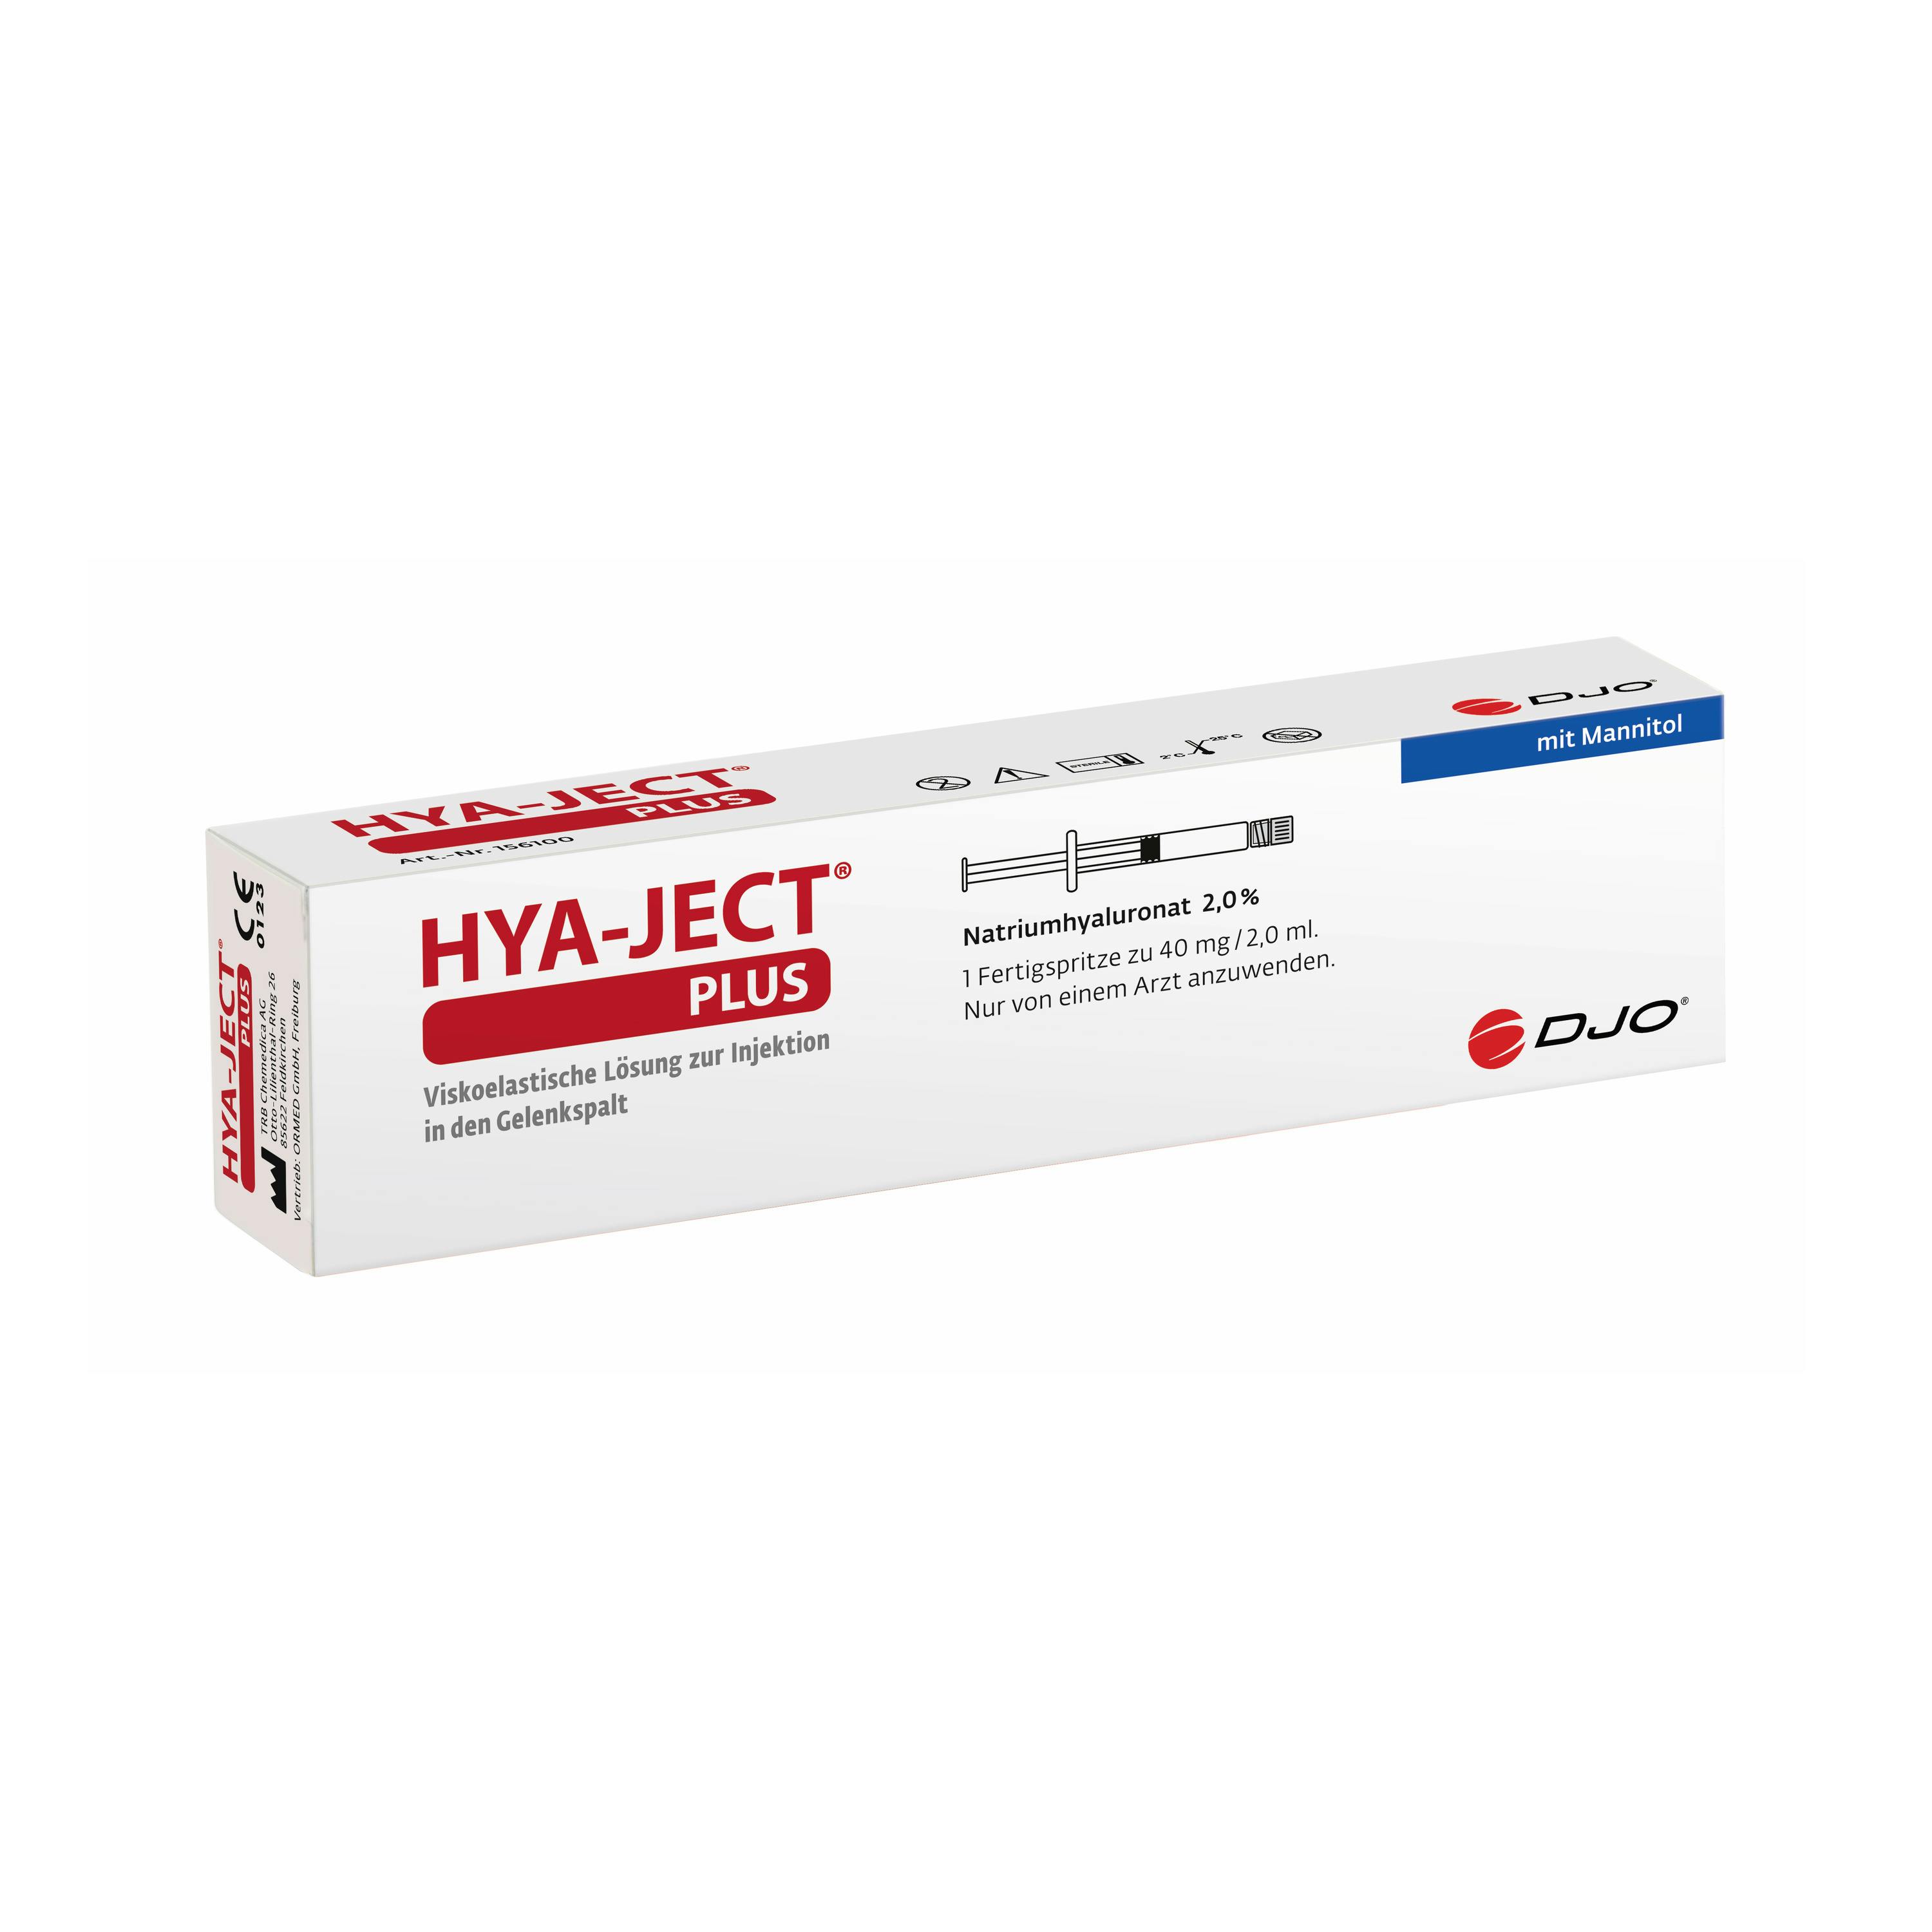 Produktbild Hyaluronsäure zur intraartikulären Arthrosebehandlung großer Gelenke, 1 Fertigspritze, 40mg:2ml ohne Spritze